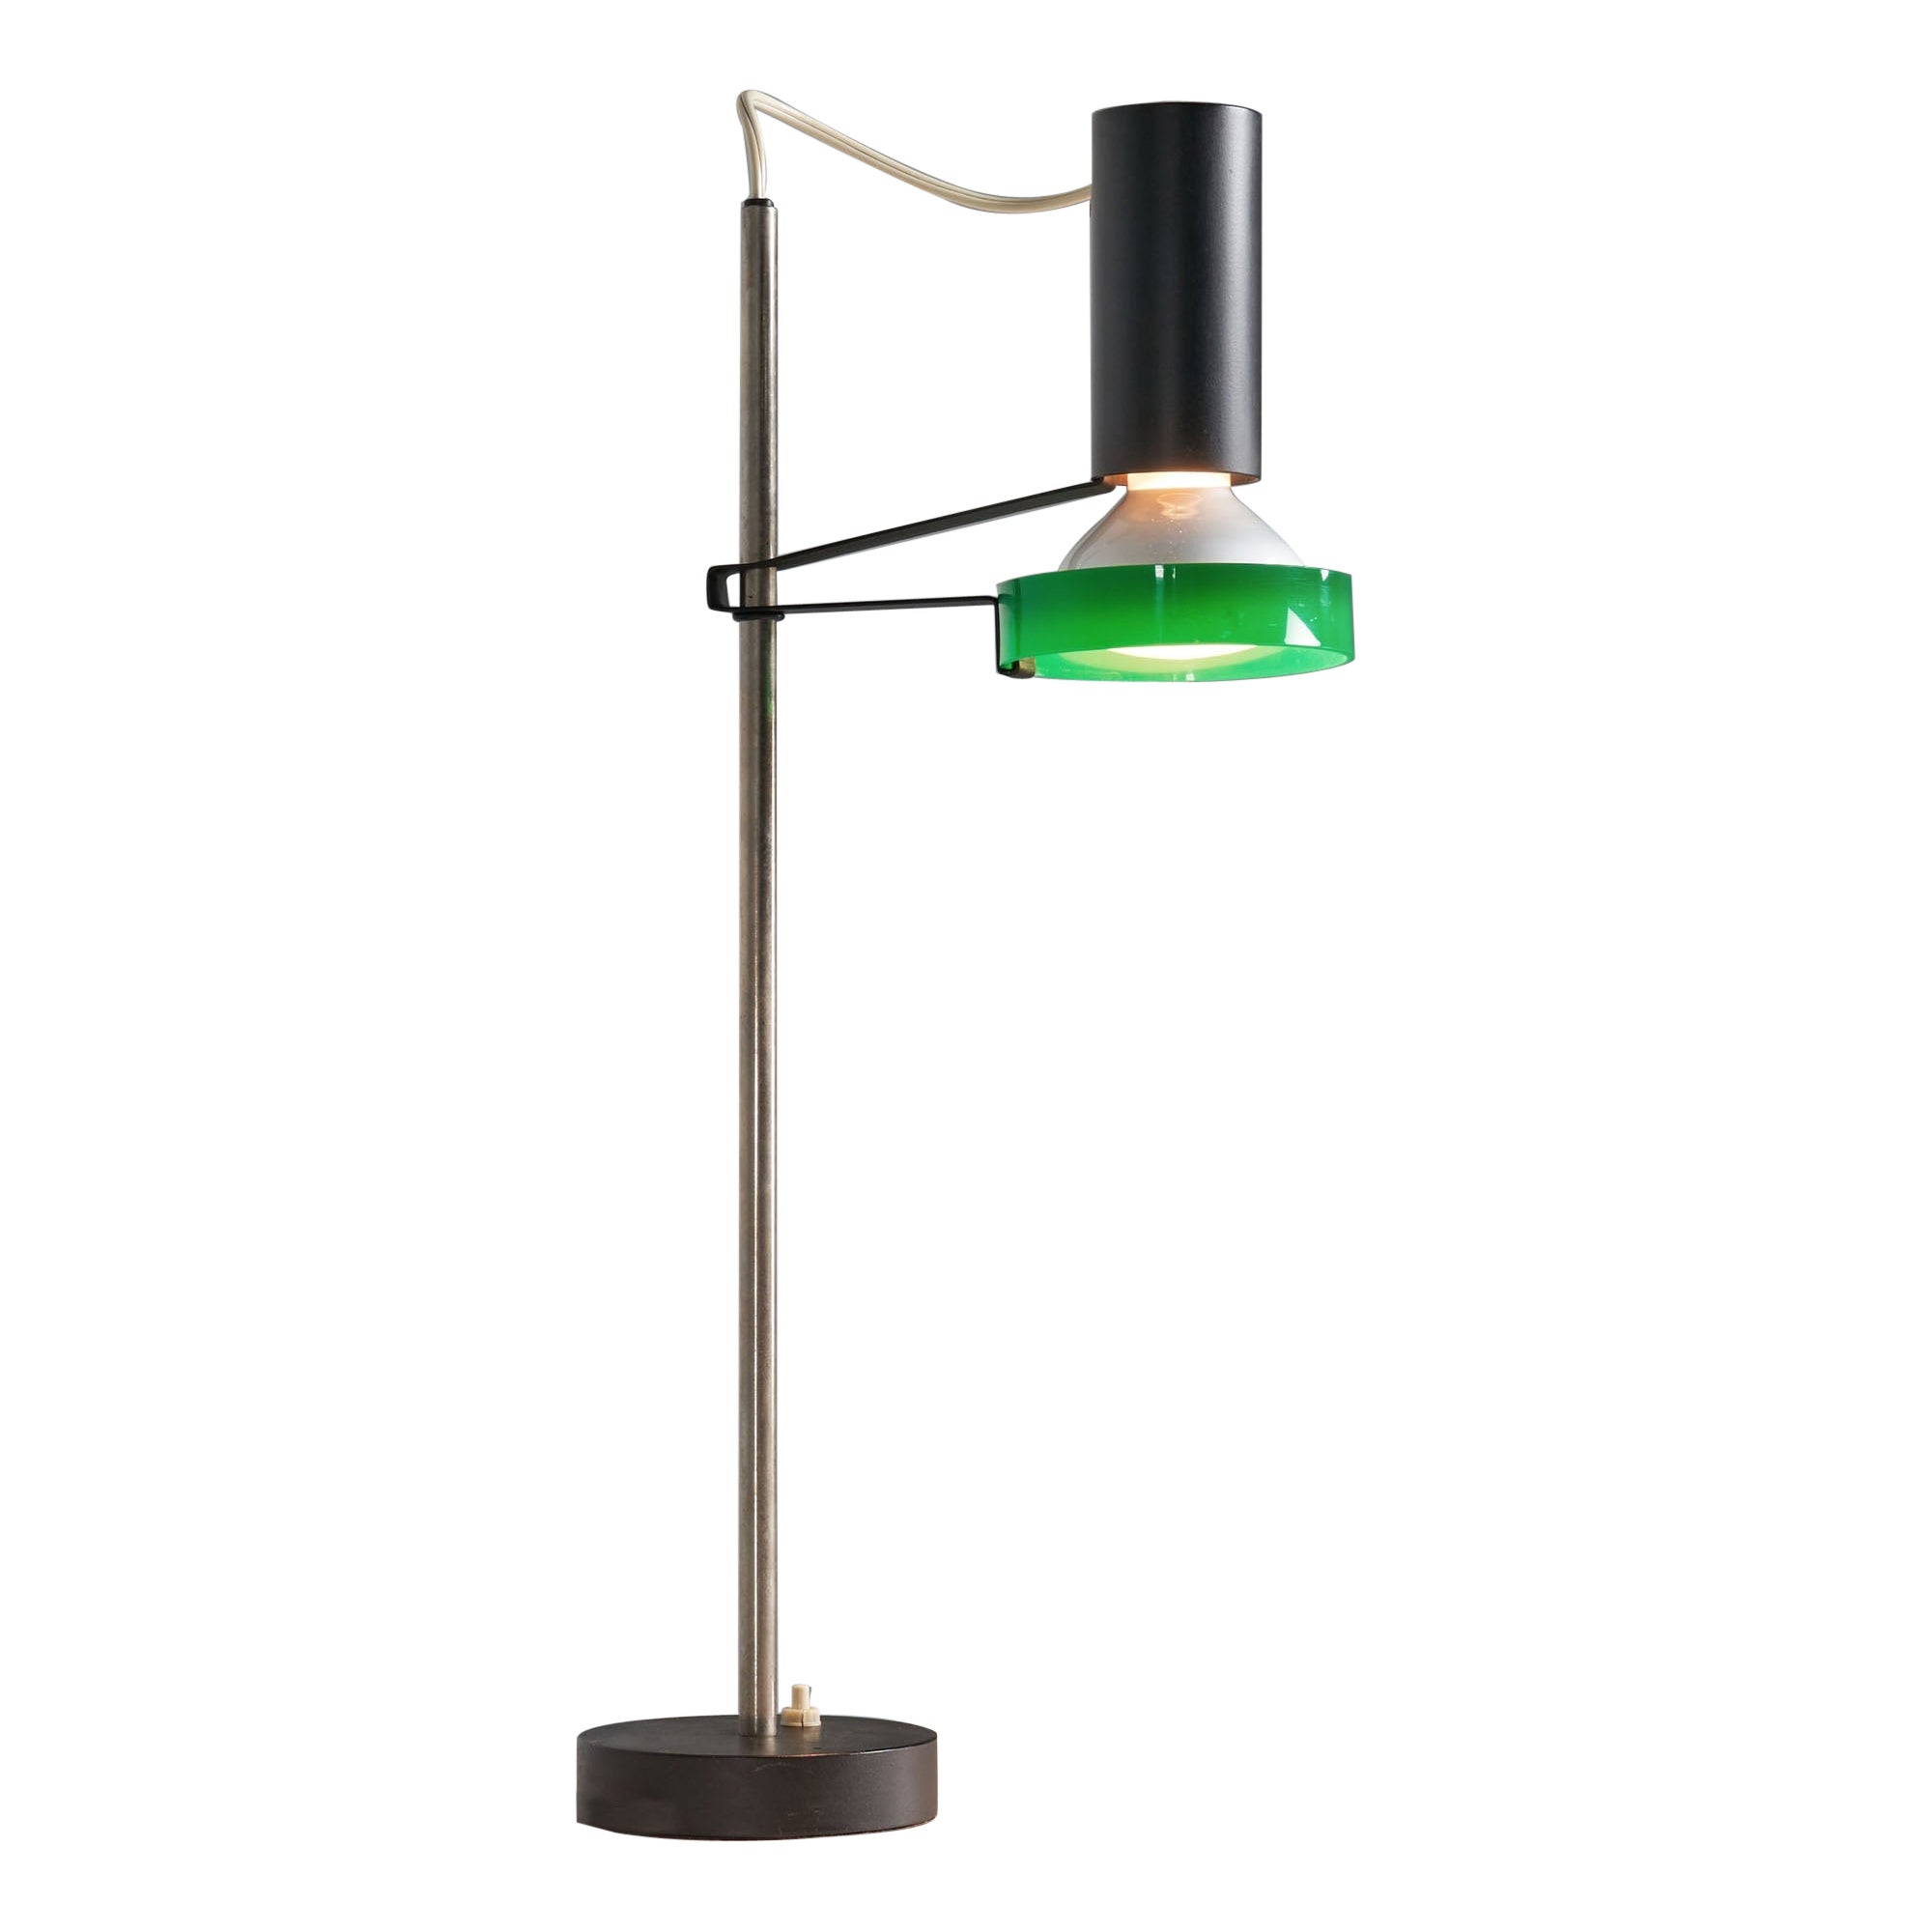 Gino Sarfatti 565 Table Lamp Arteluce, Italy, 1956 For Sale